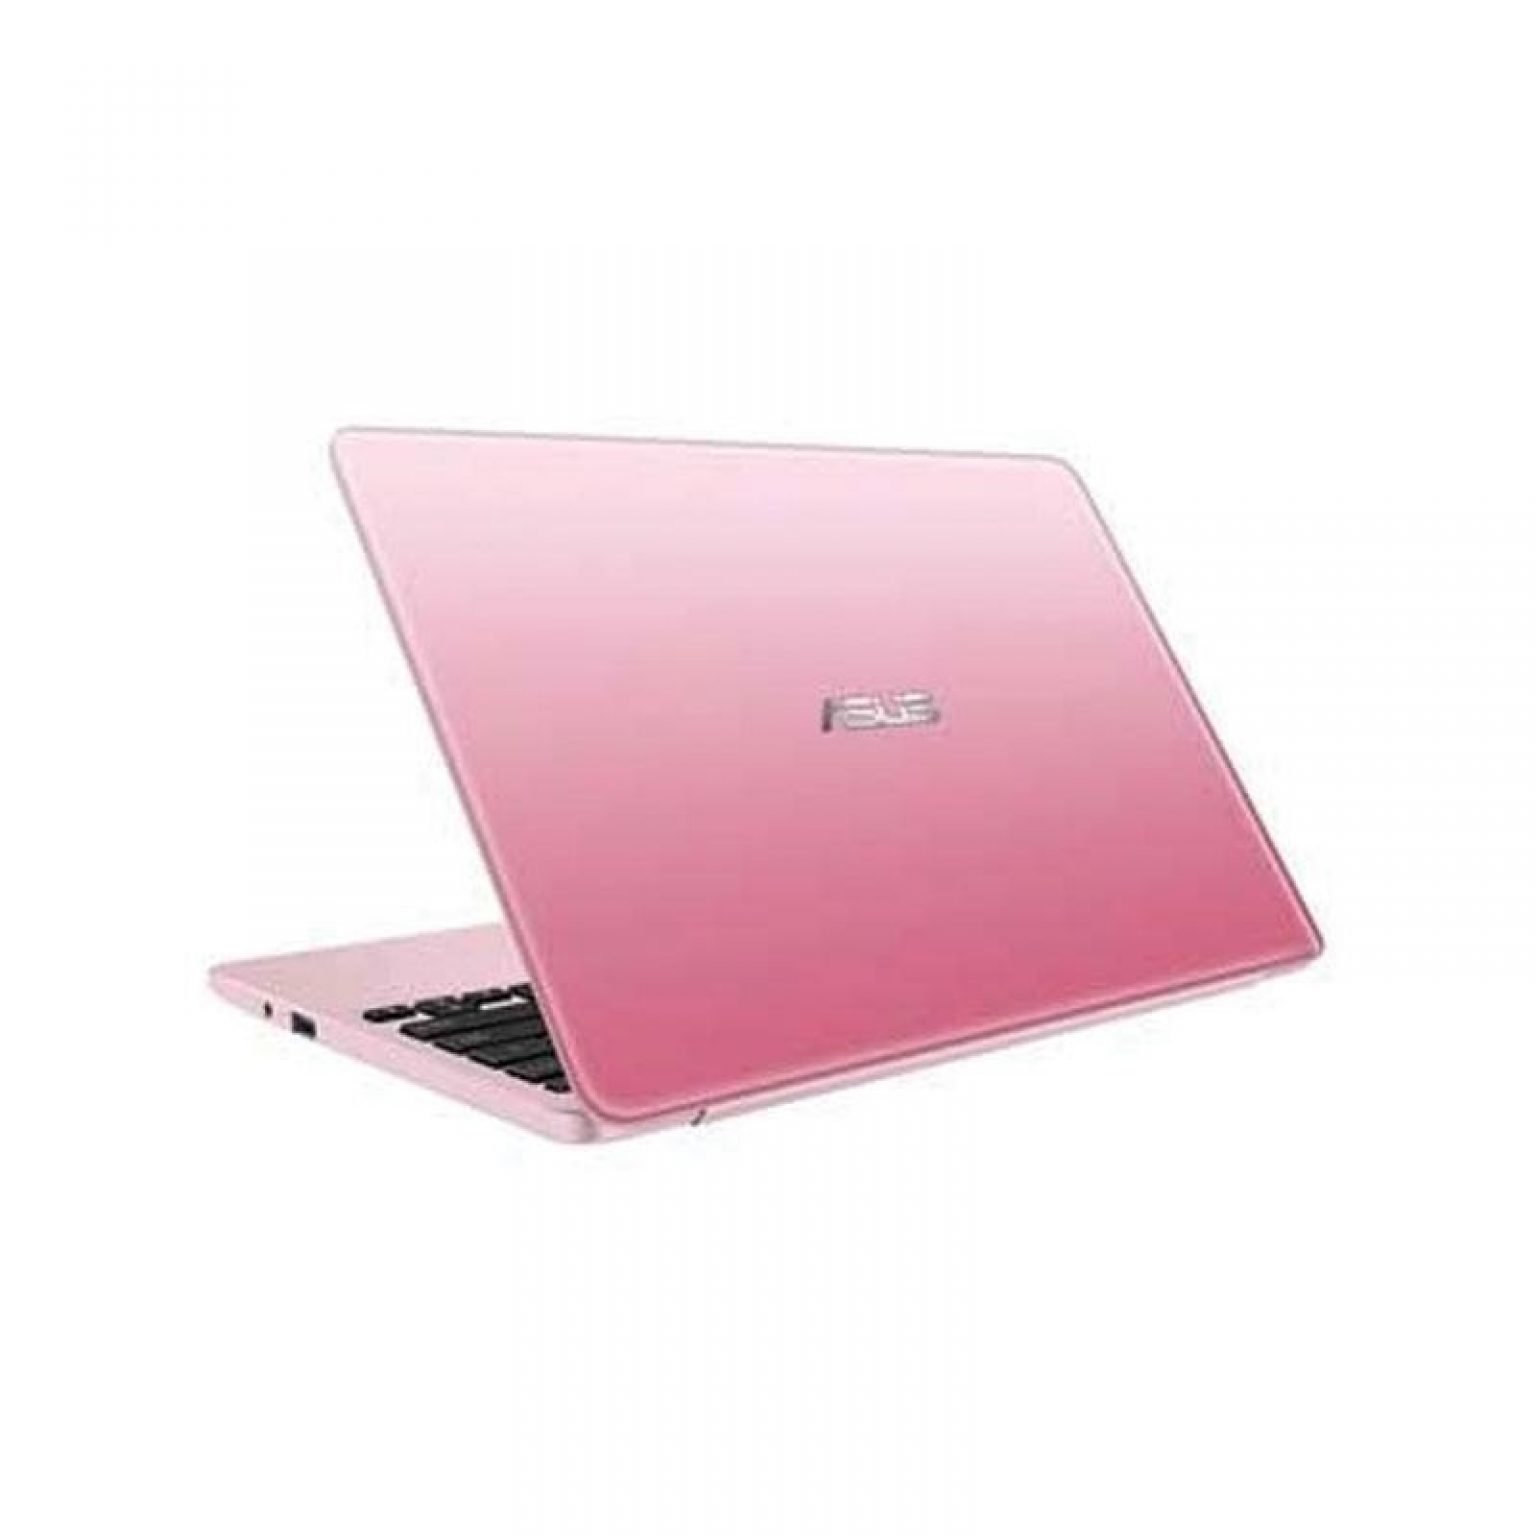 ASUS - E203MAH-FD013T (N4000/2GB RAM/500GB HDD/11.6inch/Petal Pink)